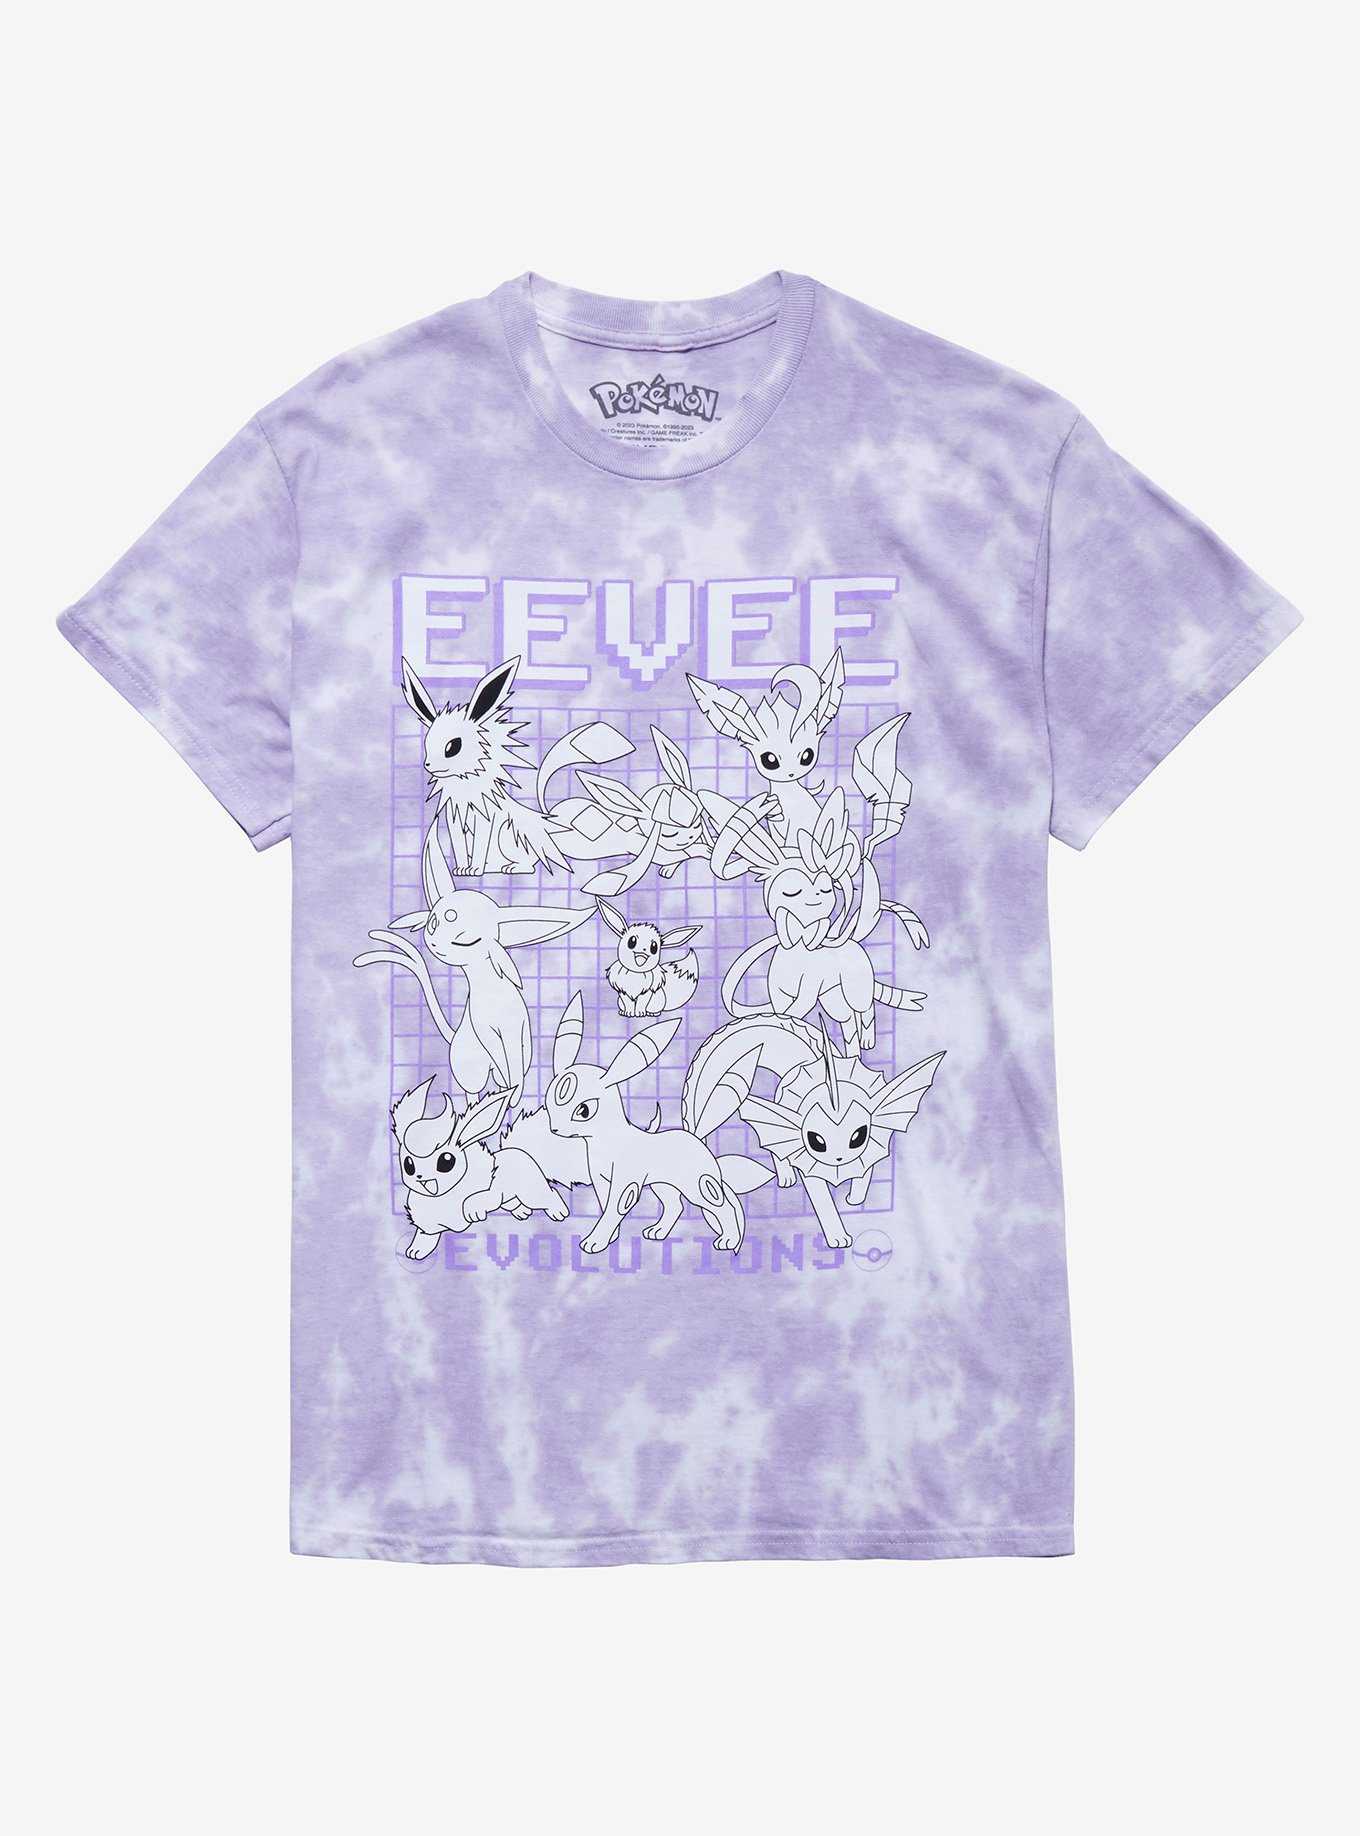 Pokemon Eeveelutions Tie-Dye Boyfriend Fit Girls T-Shirt, , hi-res